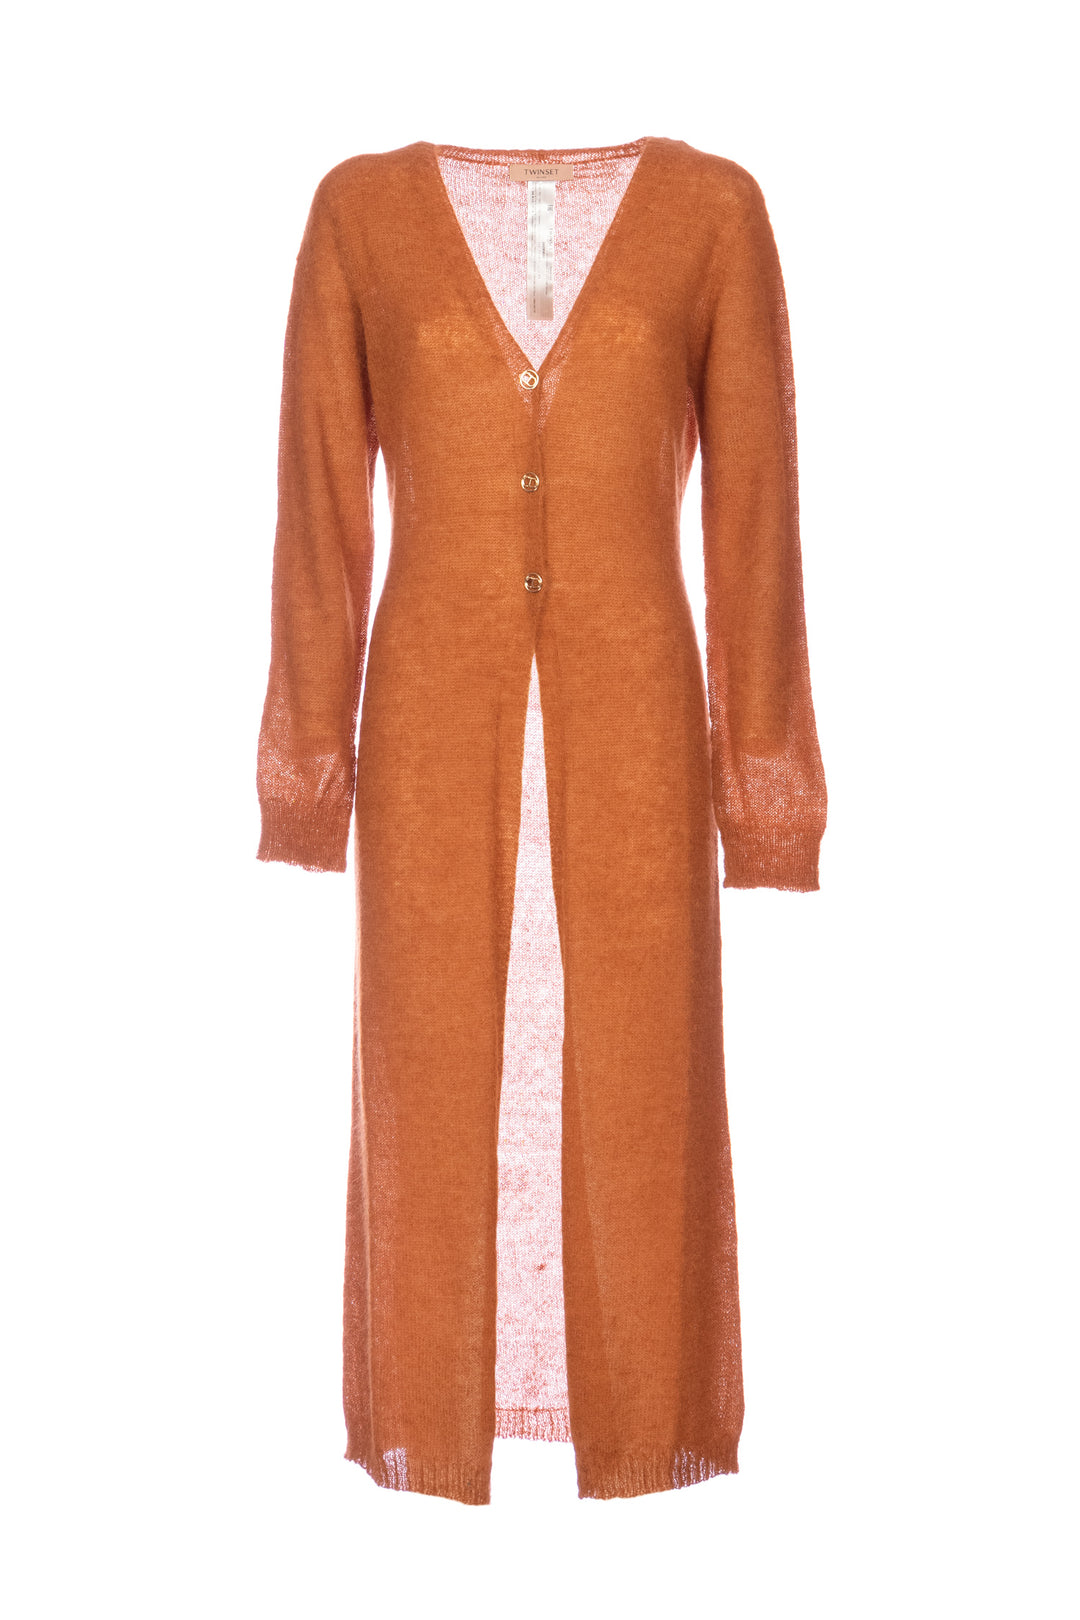 TWINSET Maxi cardigan marrone in misto mohair e alpaca - Mancinelli 1954